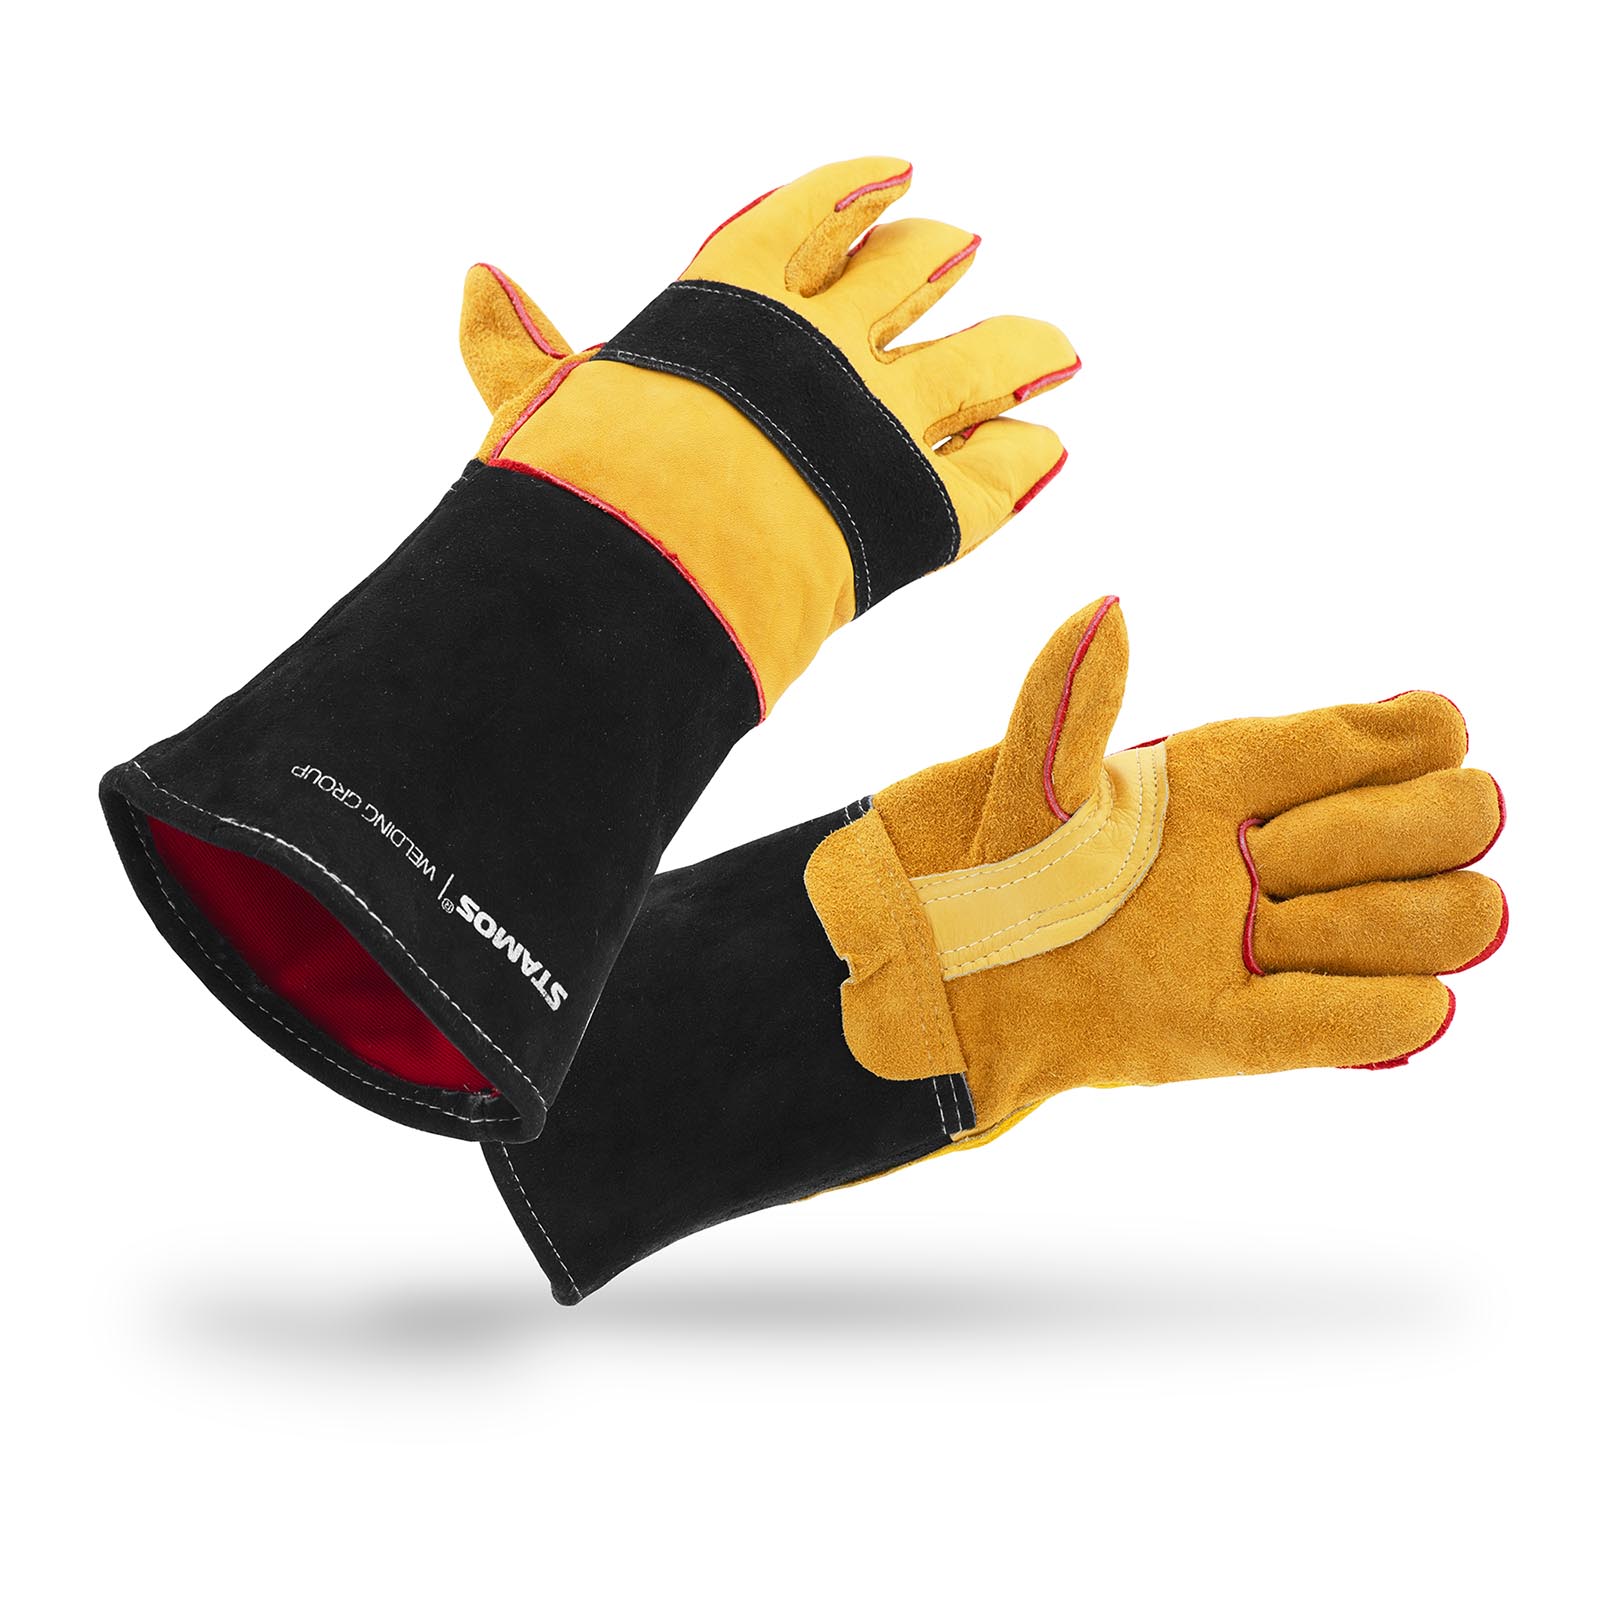 Ръкавици за заваряване - размер М